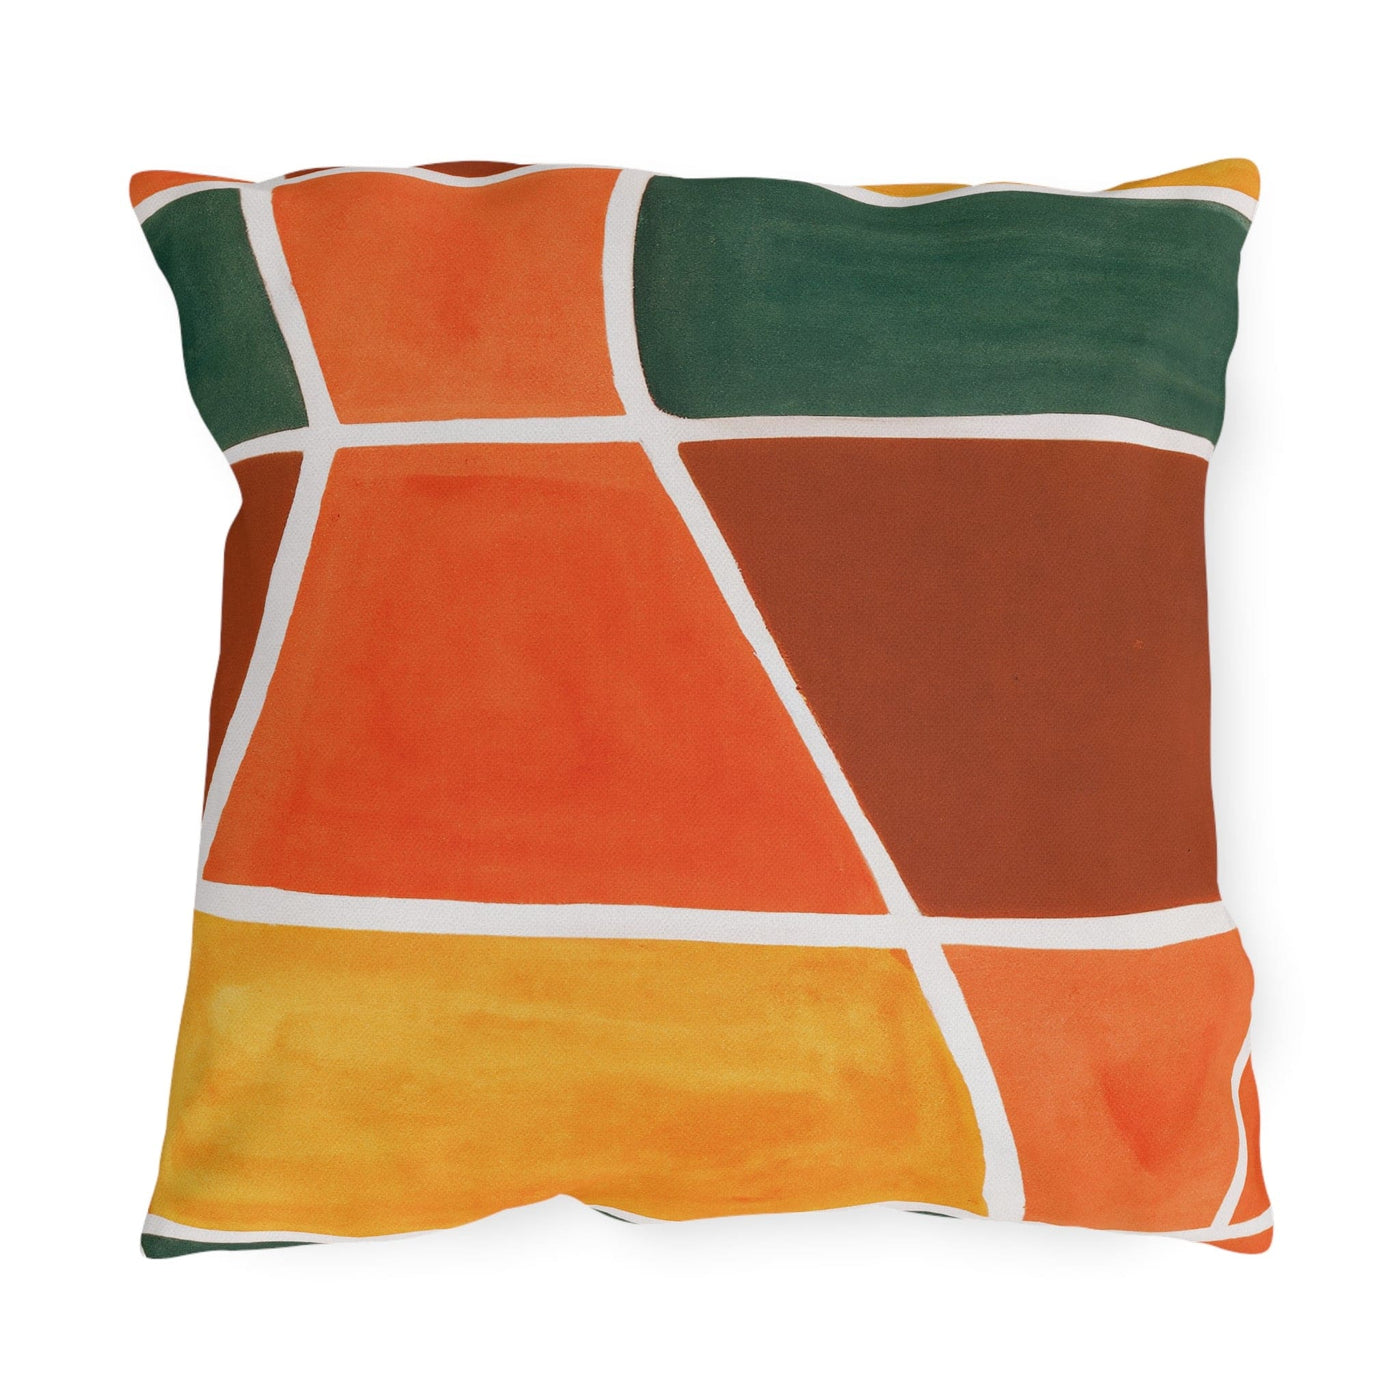 Decorative Outdoor Pillows With Zipper - Set Of 2 Orange Green Yellow Boho